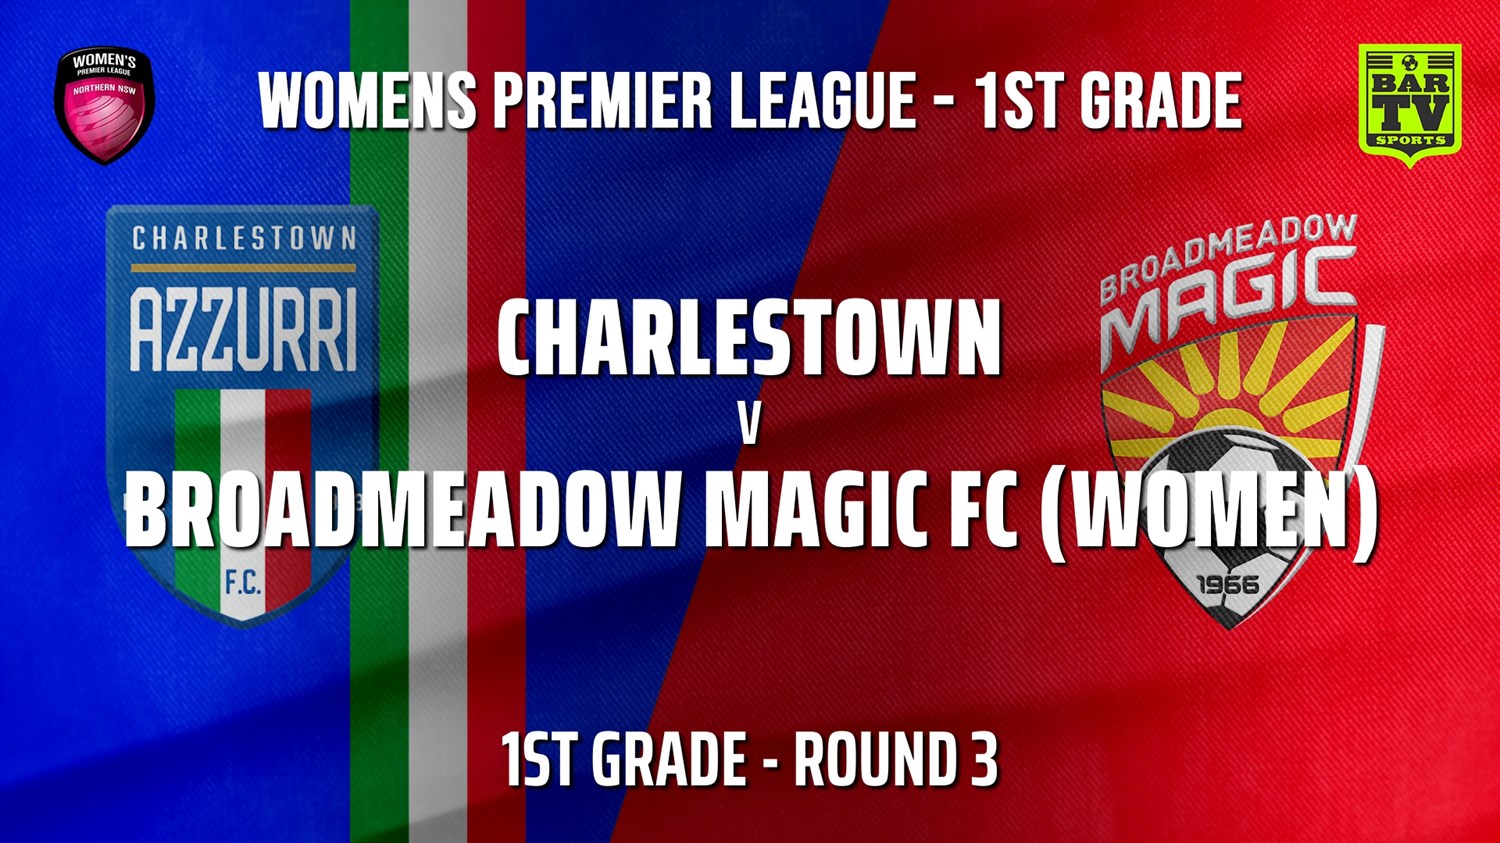 Herald Women’s Premier League Round 3 - 1st Grade - Charlestown Azzurri FC v Broadmeadow Magic FC Minigame Slate Image